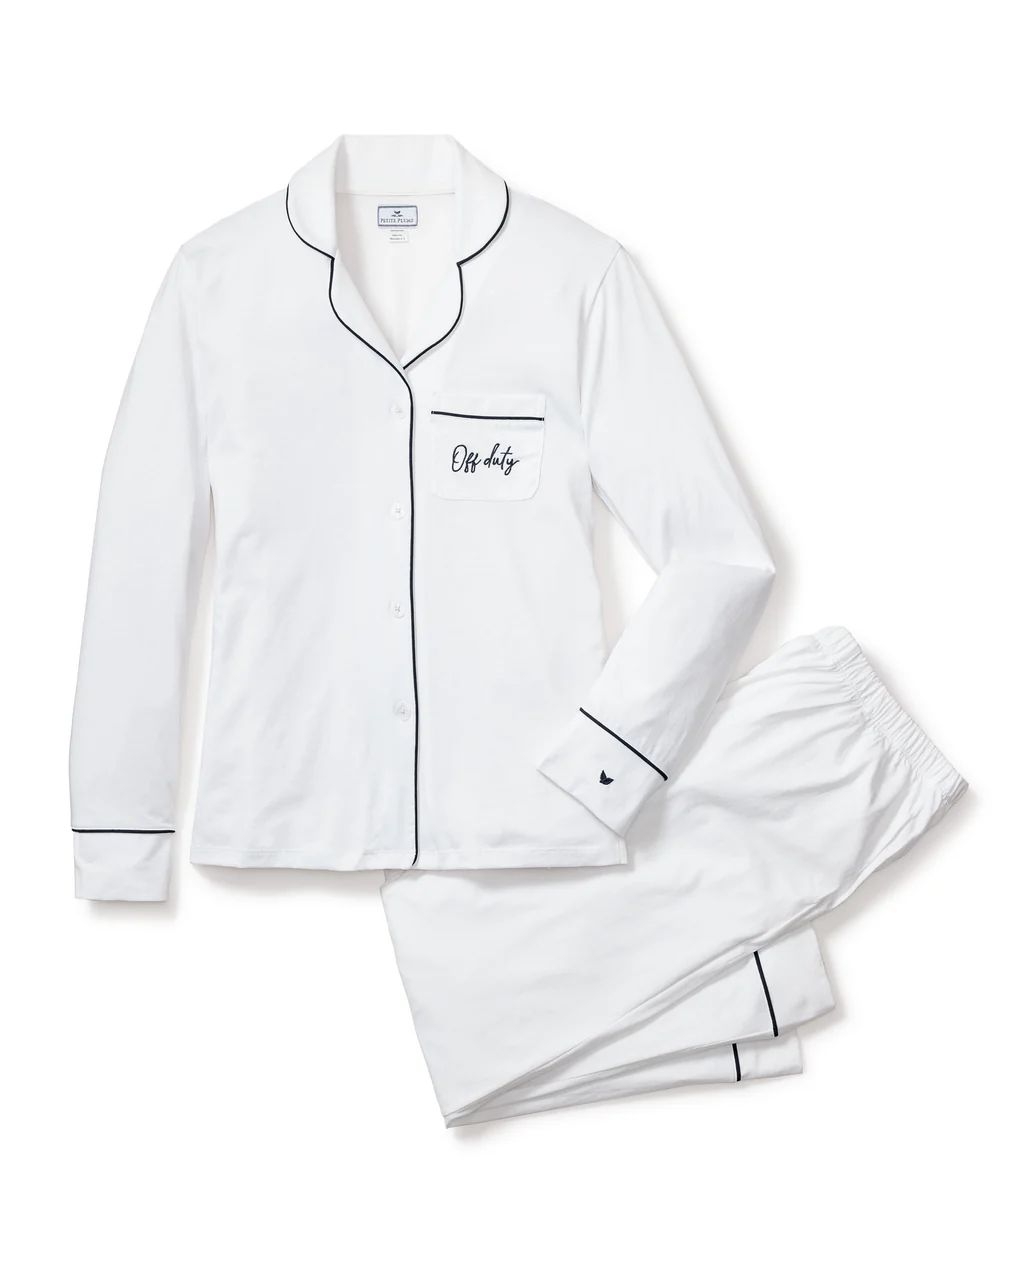 Women's Pima White Pajama Set with Off Duty Embroidery | Petite Plume